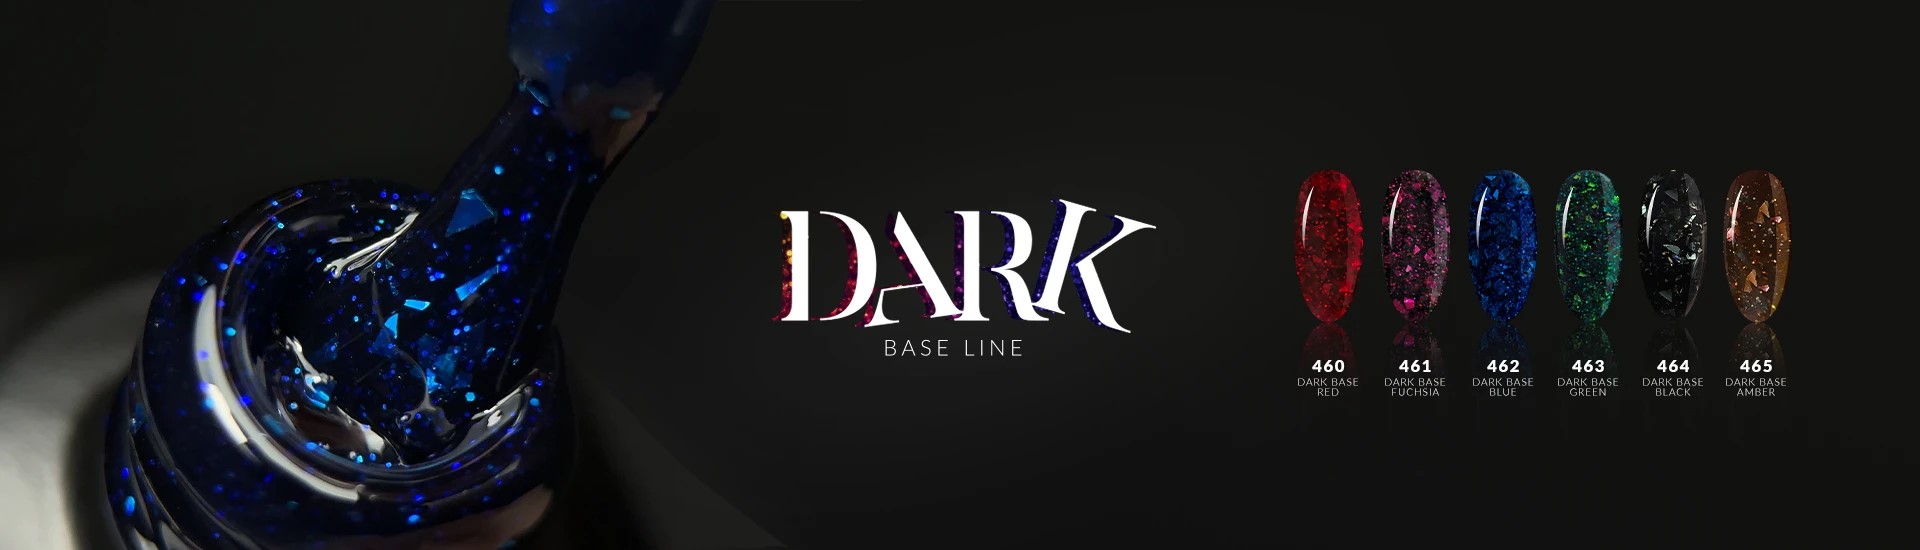 Dark Base Cover Line - Linia Podstawowa